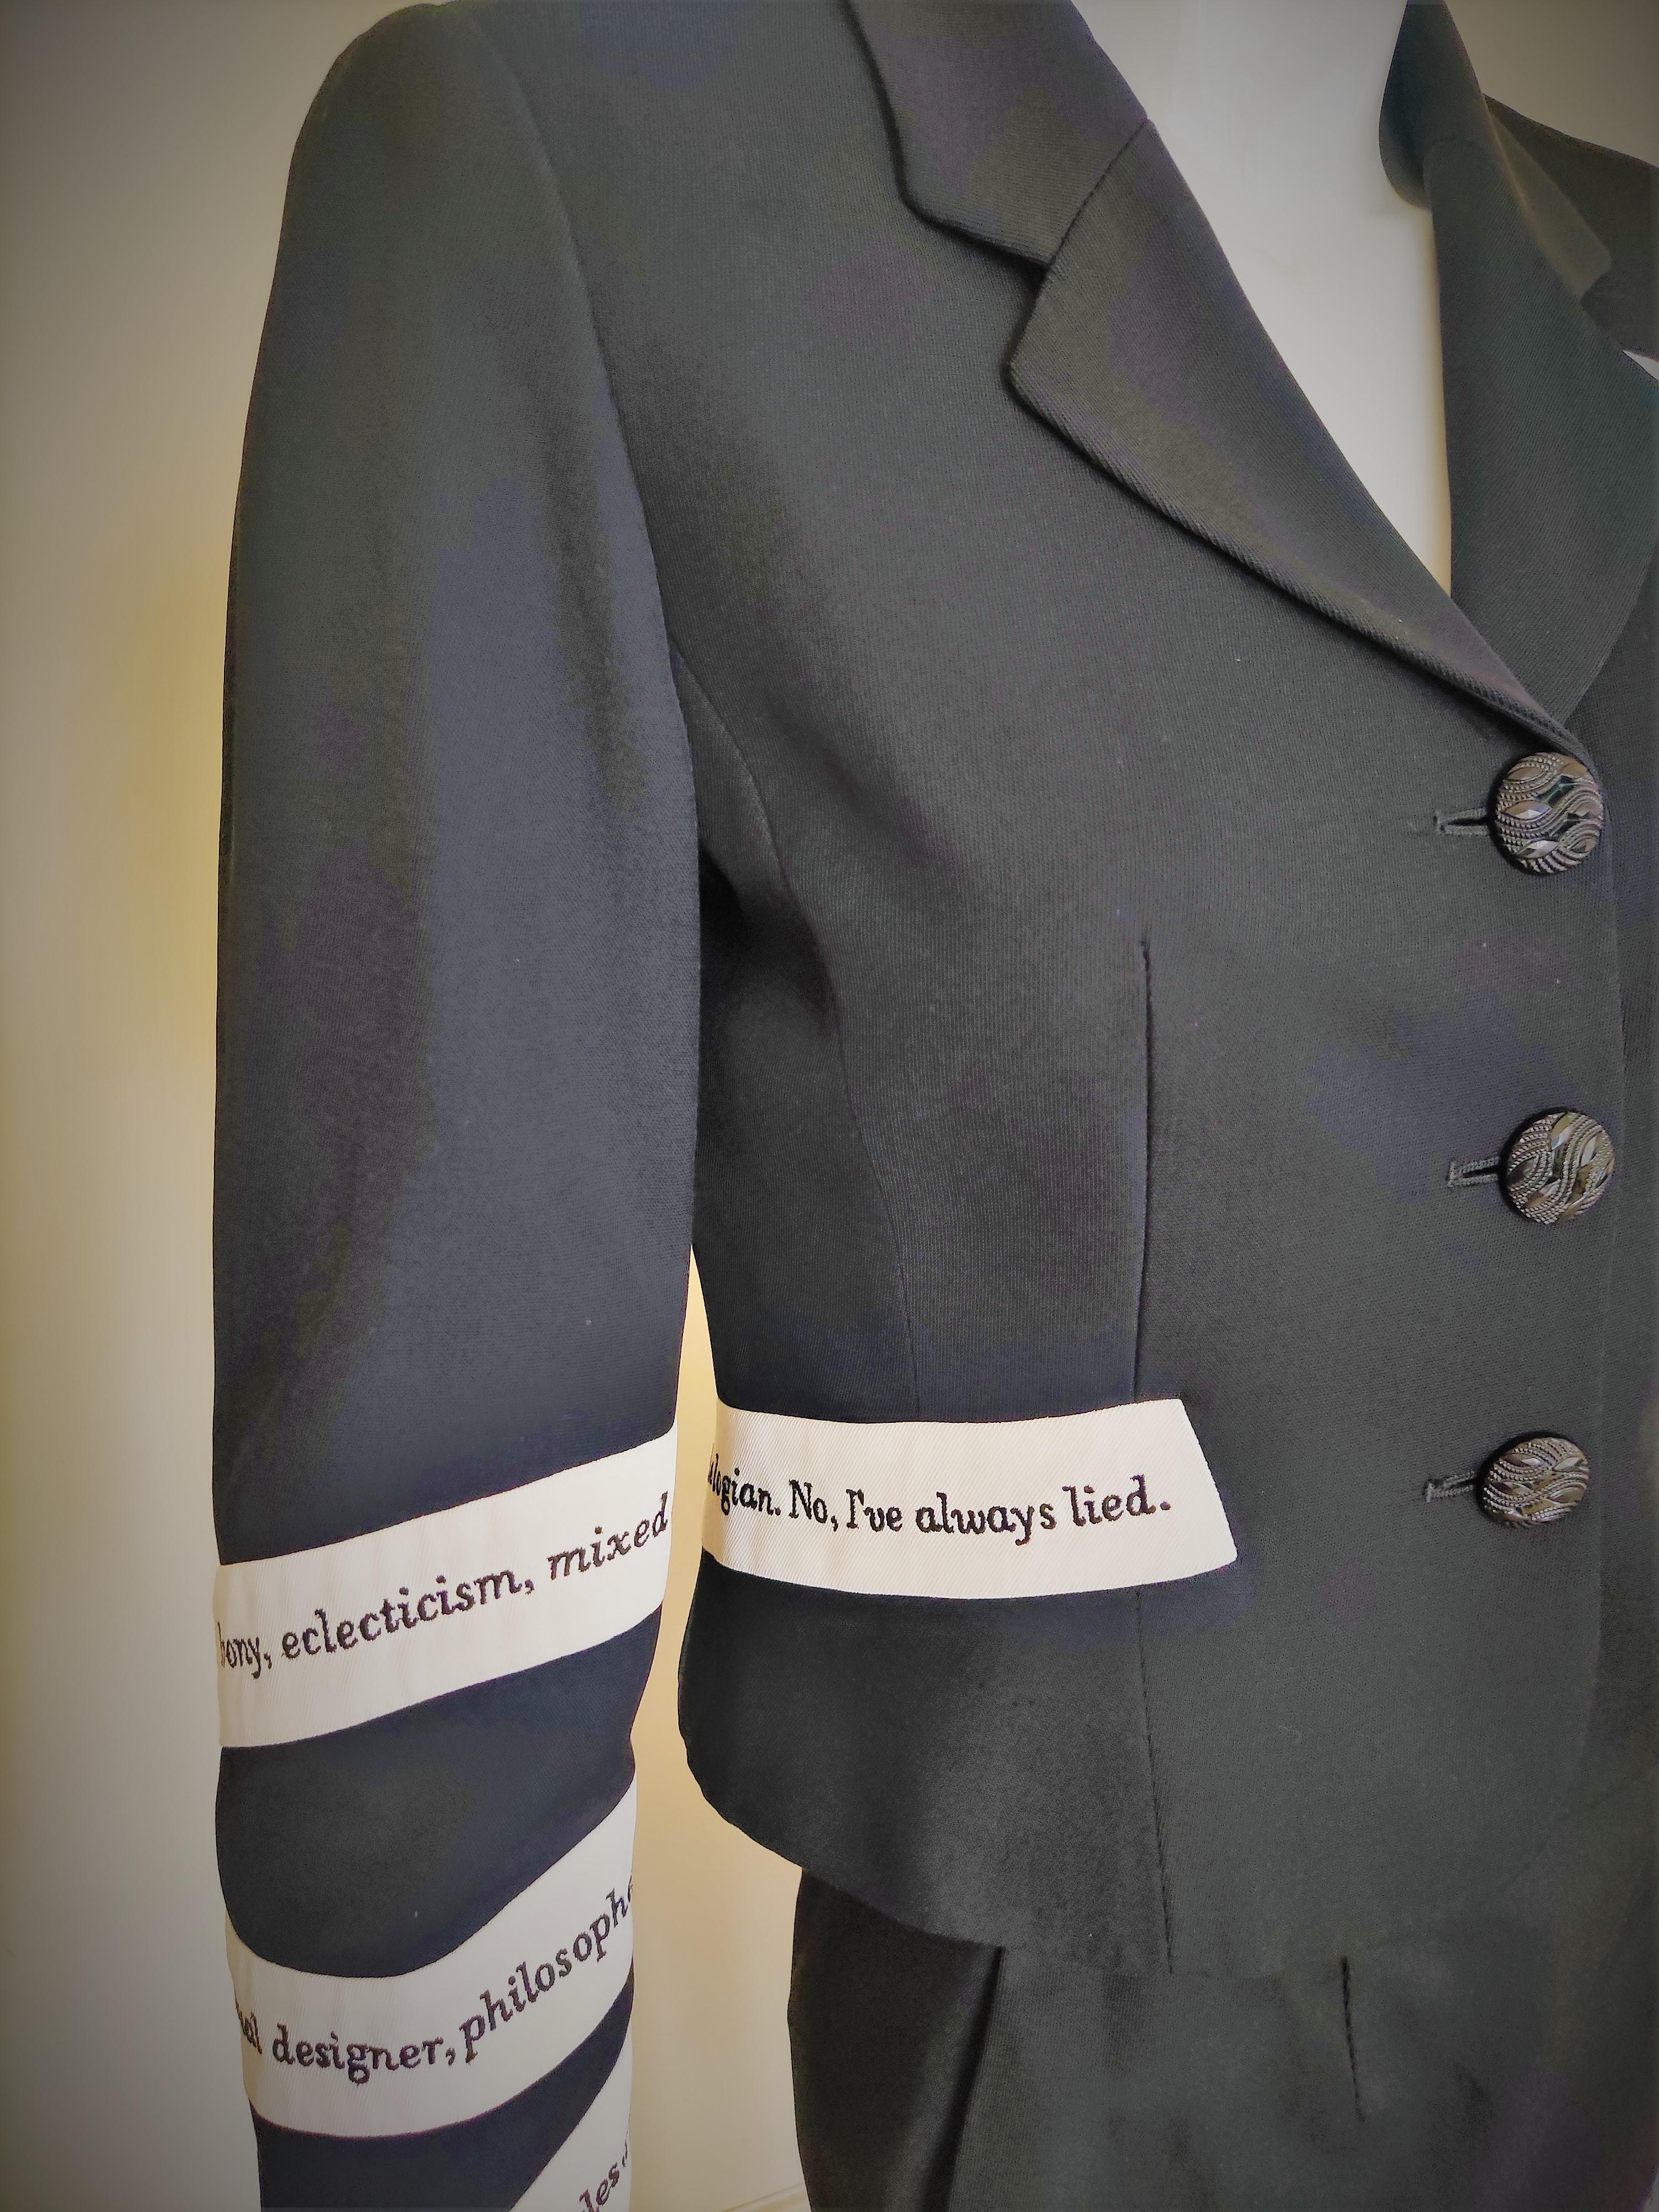 Moschino Cheap and Chic Irony Text Tape Vintage Couture Schwarz-Weißes Kleid Anzug im Angebot 4